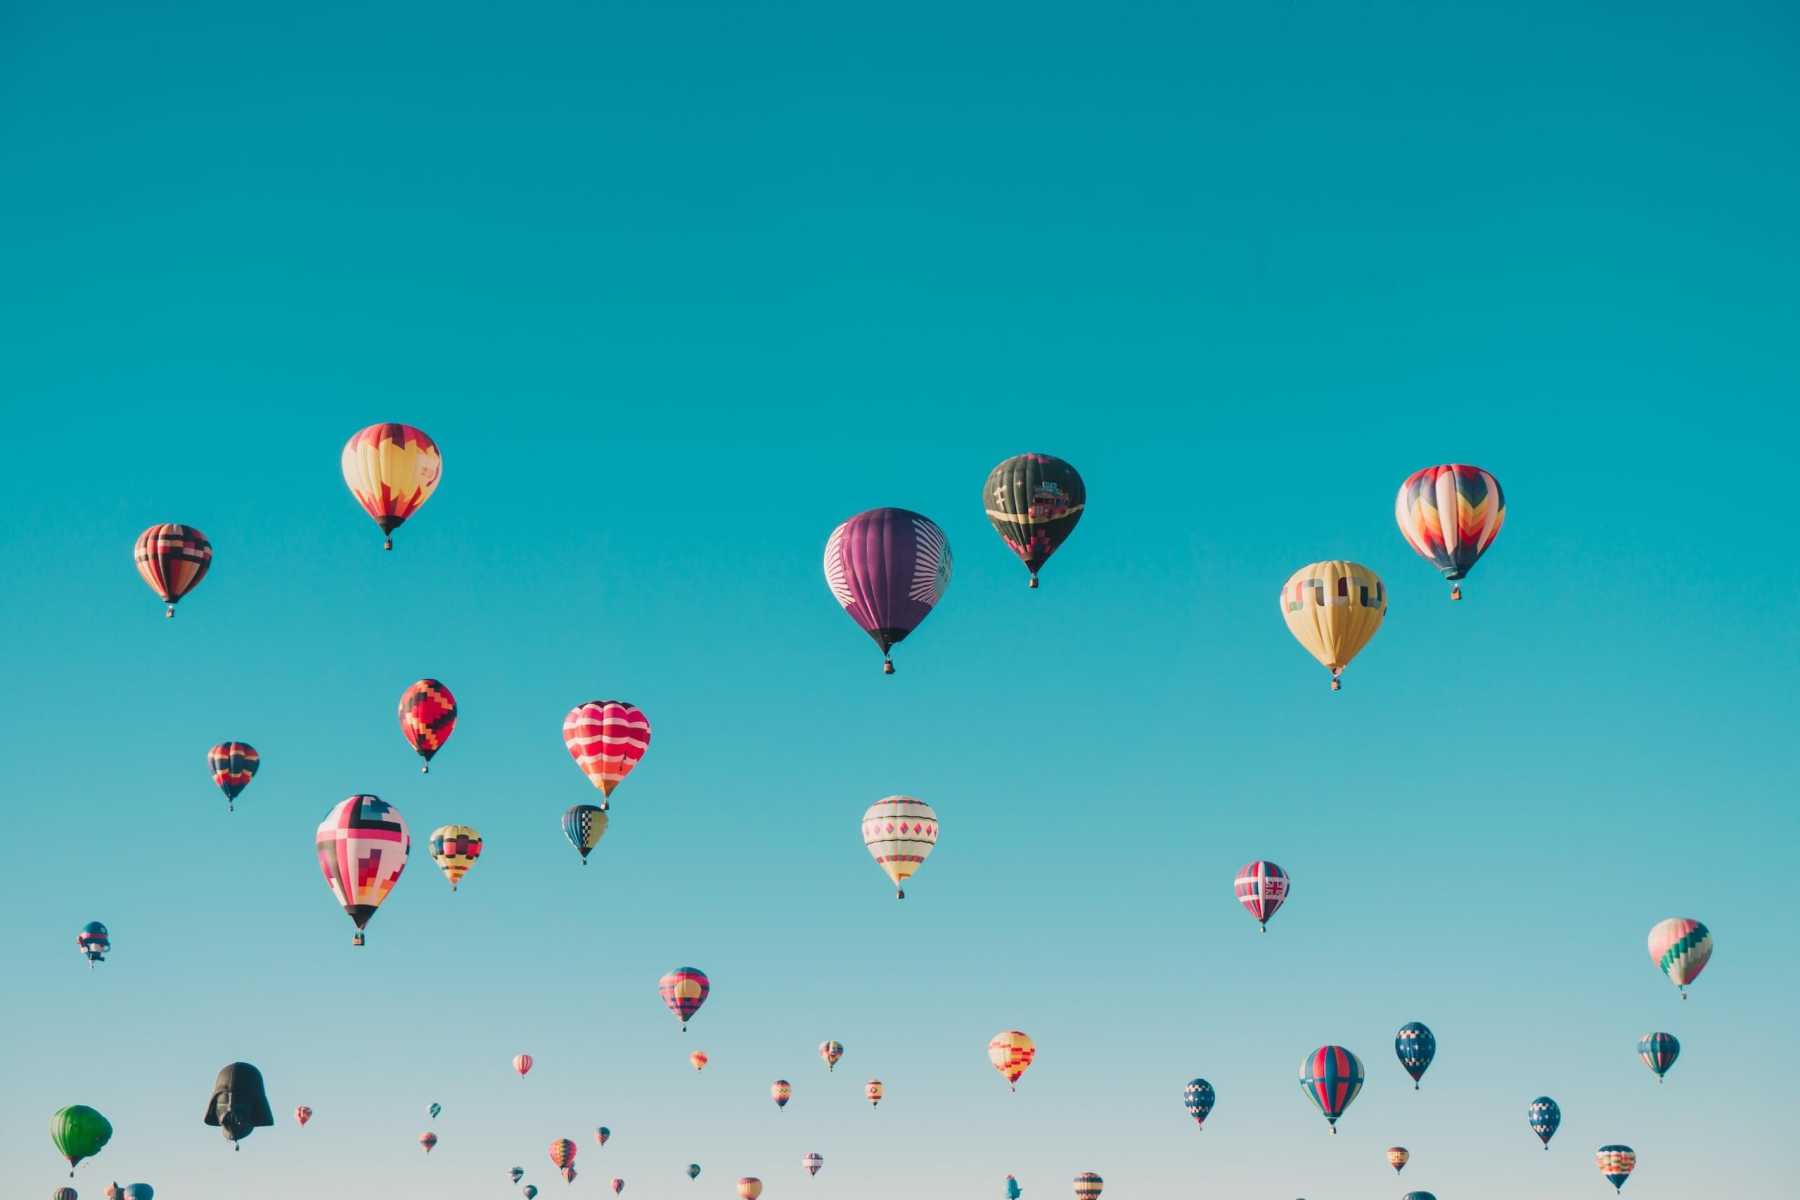 Dozens of hot air balloons against a blue sky